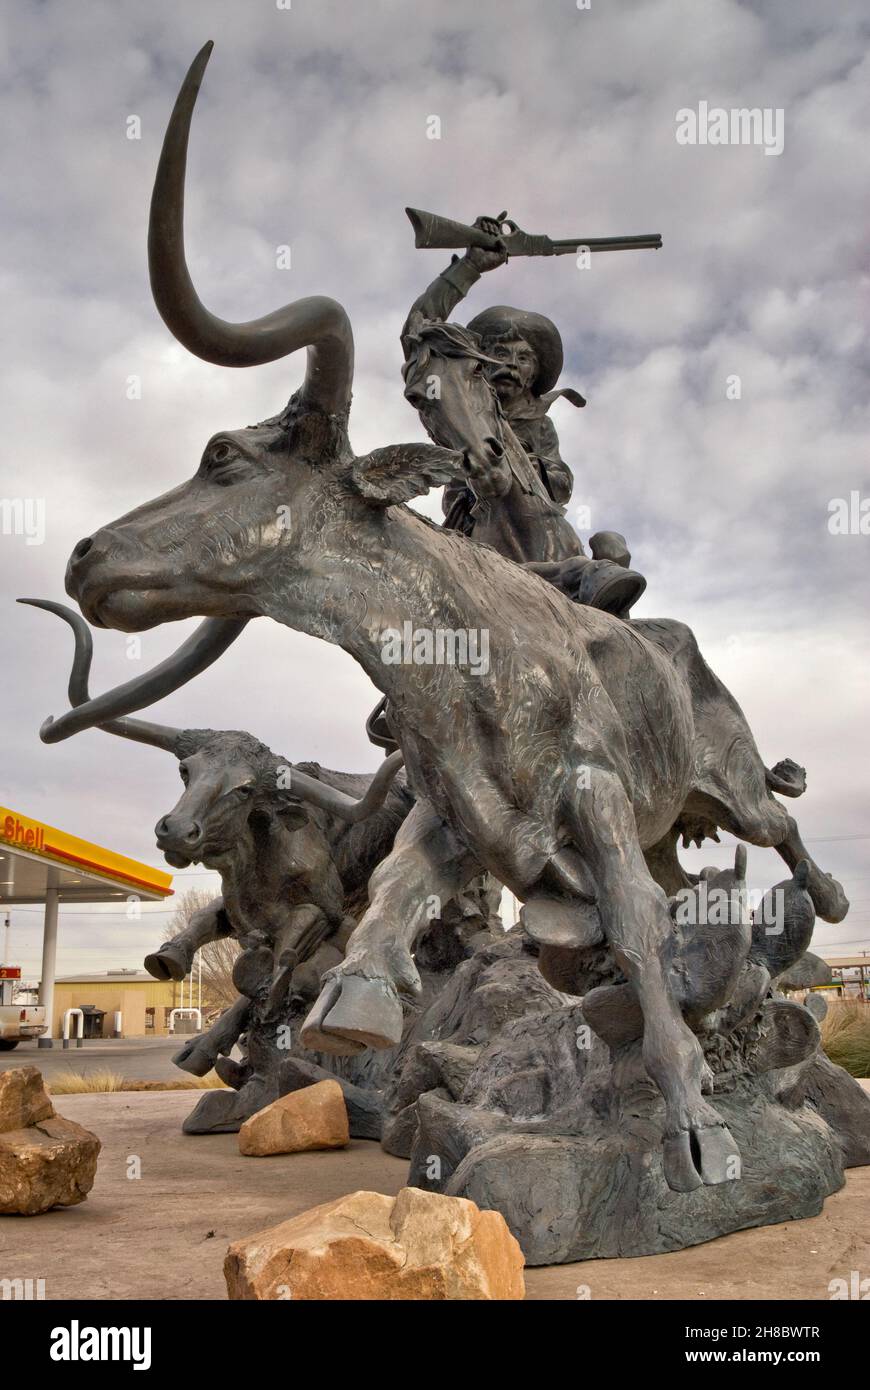 Die Trail Boss Skulptur von Vic Payne in Artesia, New Mexico, USA Stockfoto